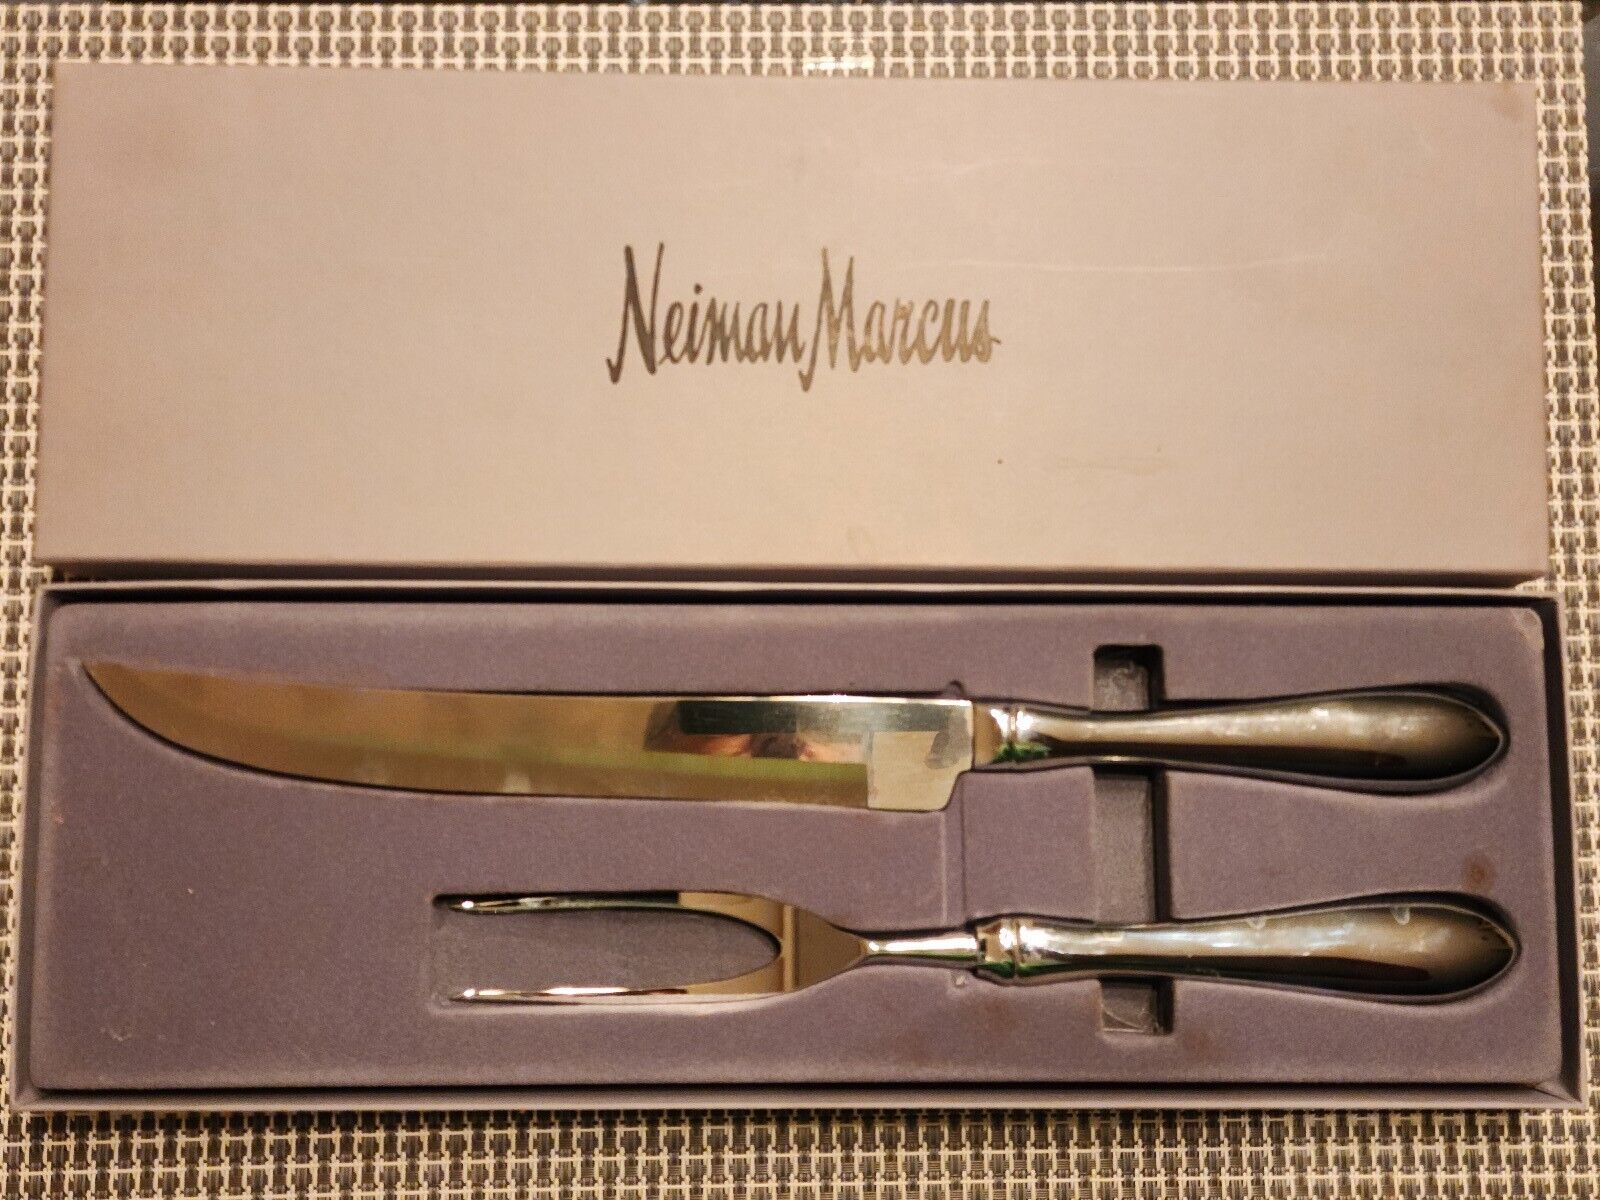 Neiman Marcus Carving Set-Original Box